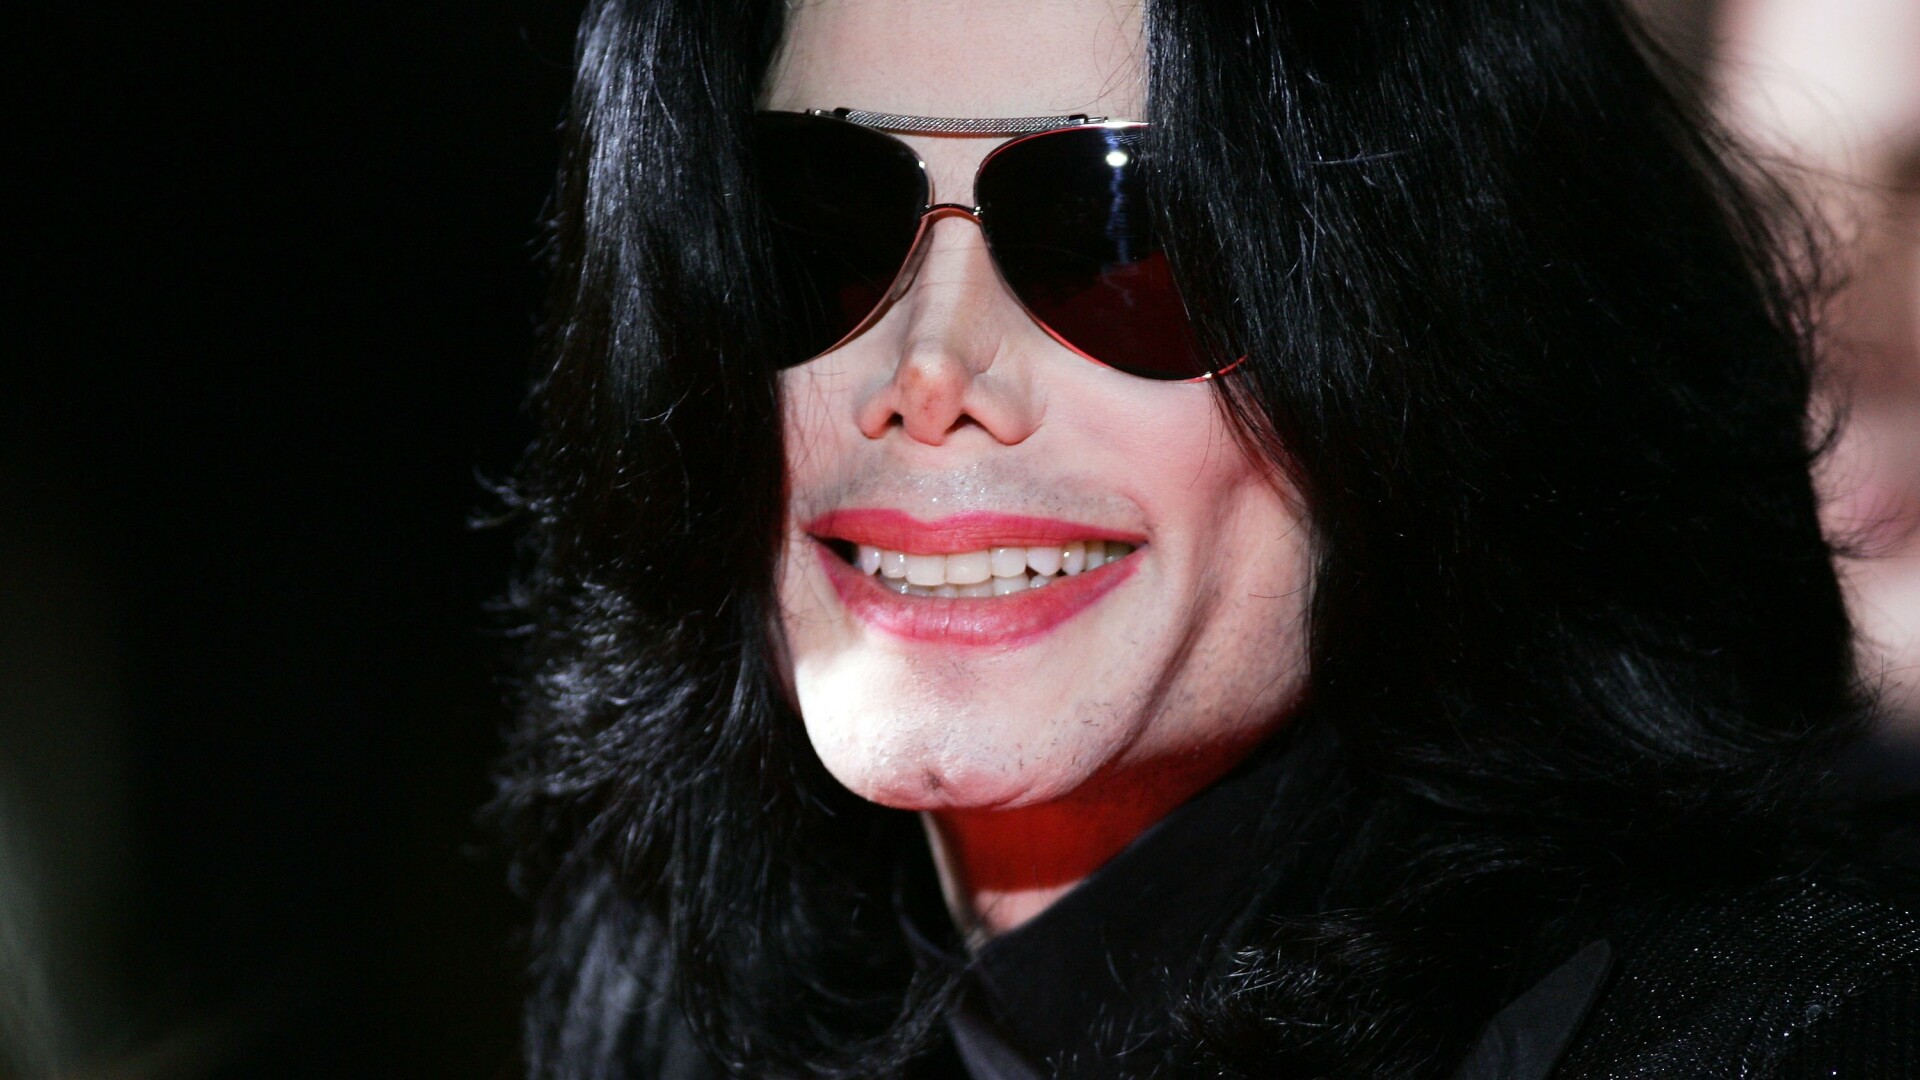 Michael Jackson Getty